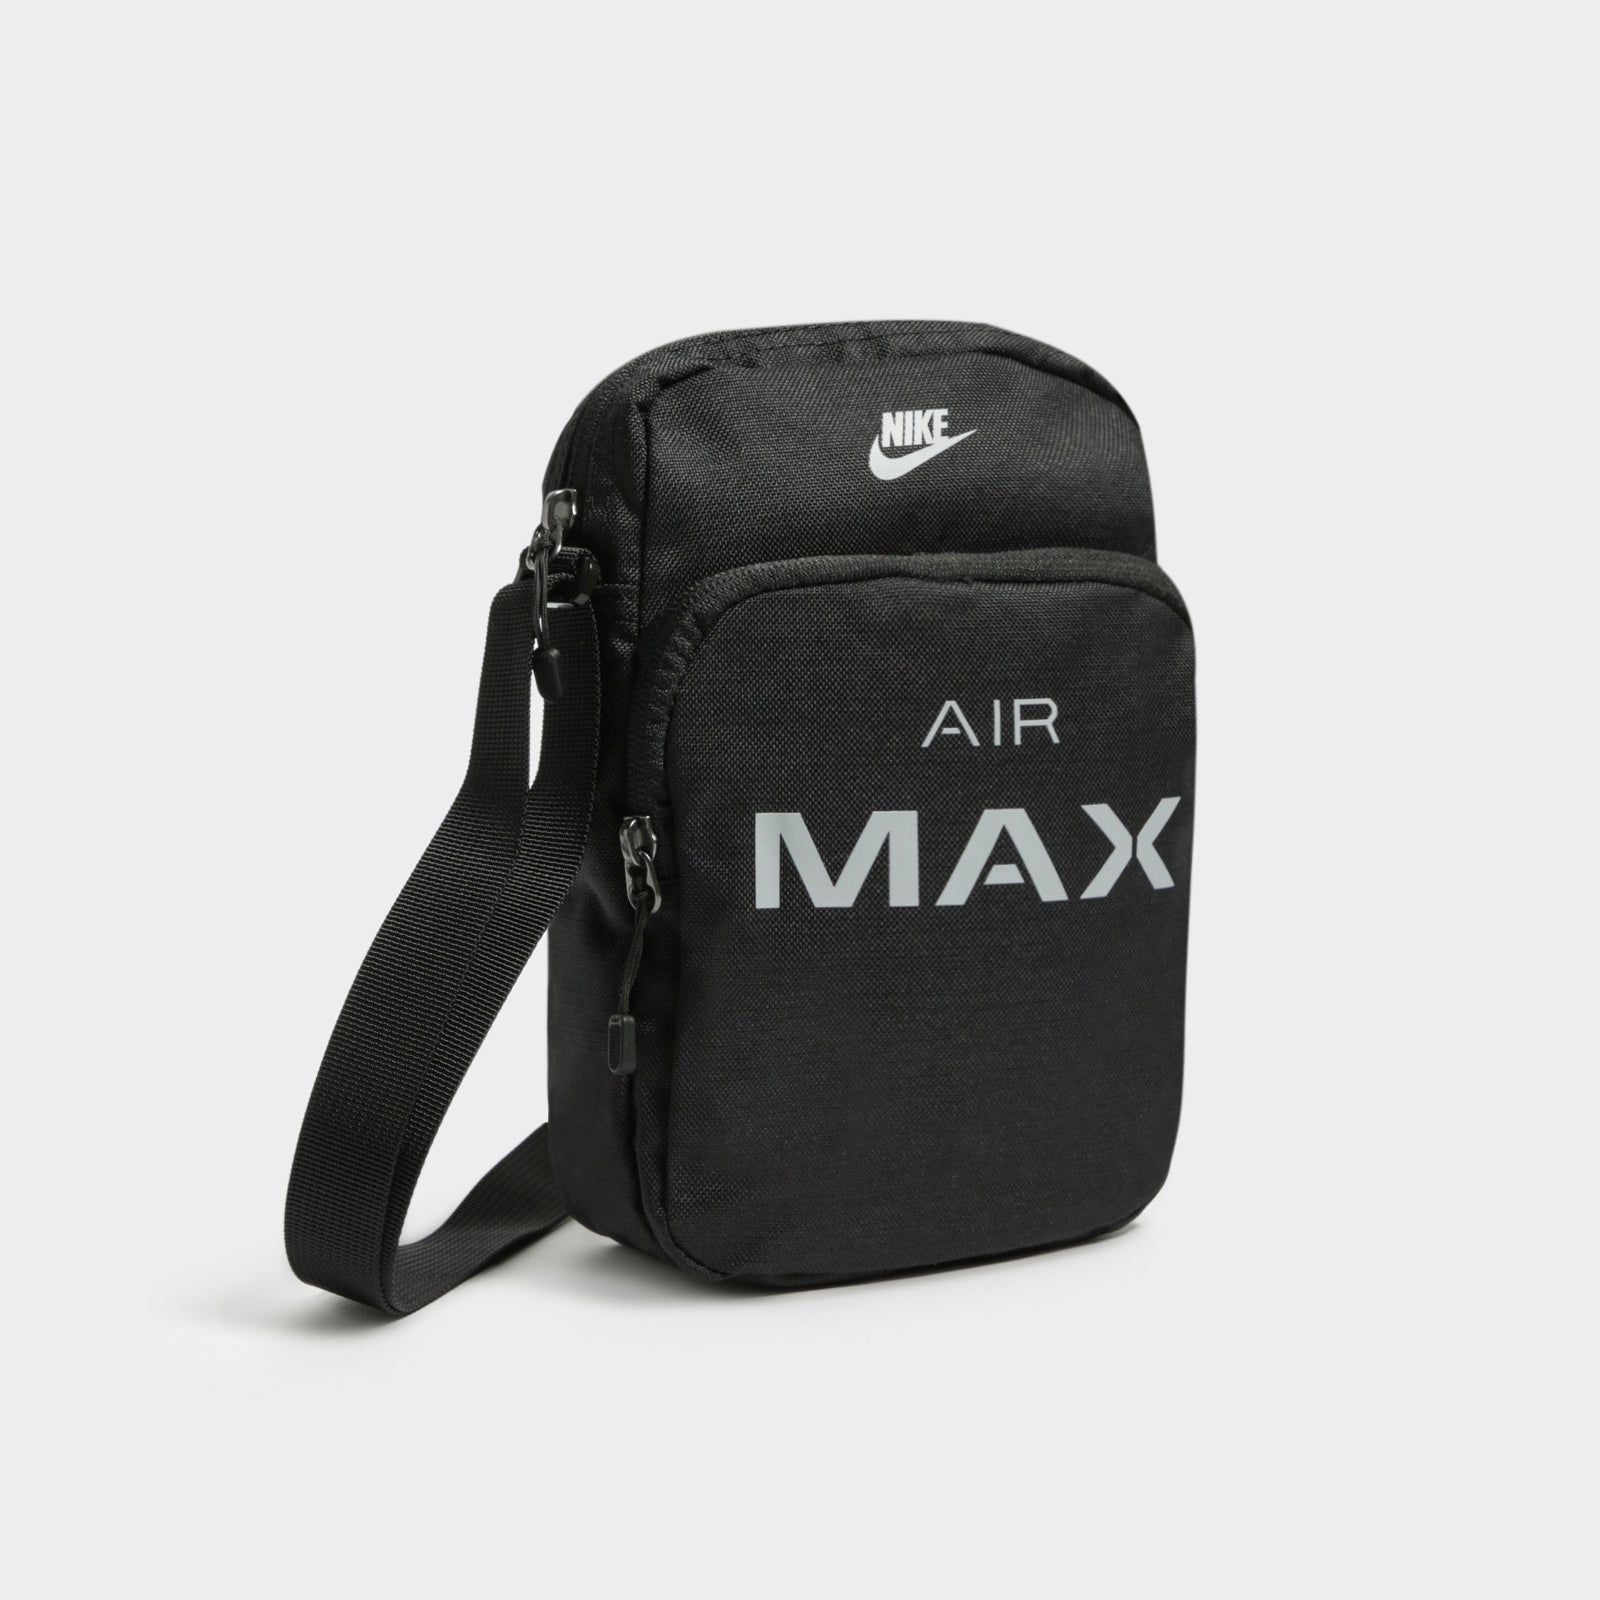 Nike Air Max Small Items Bag in Black 